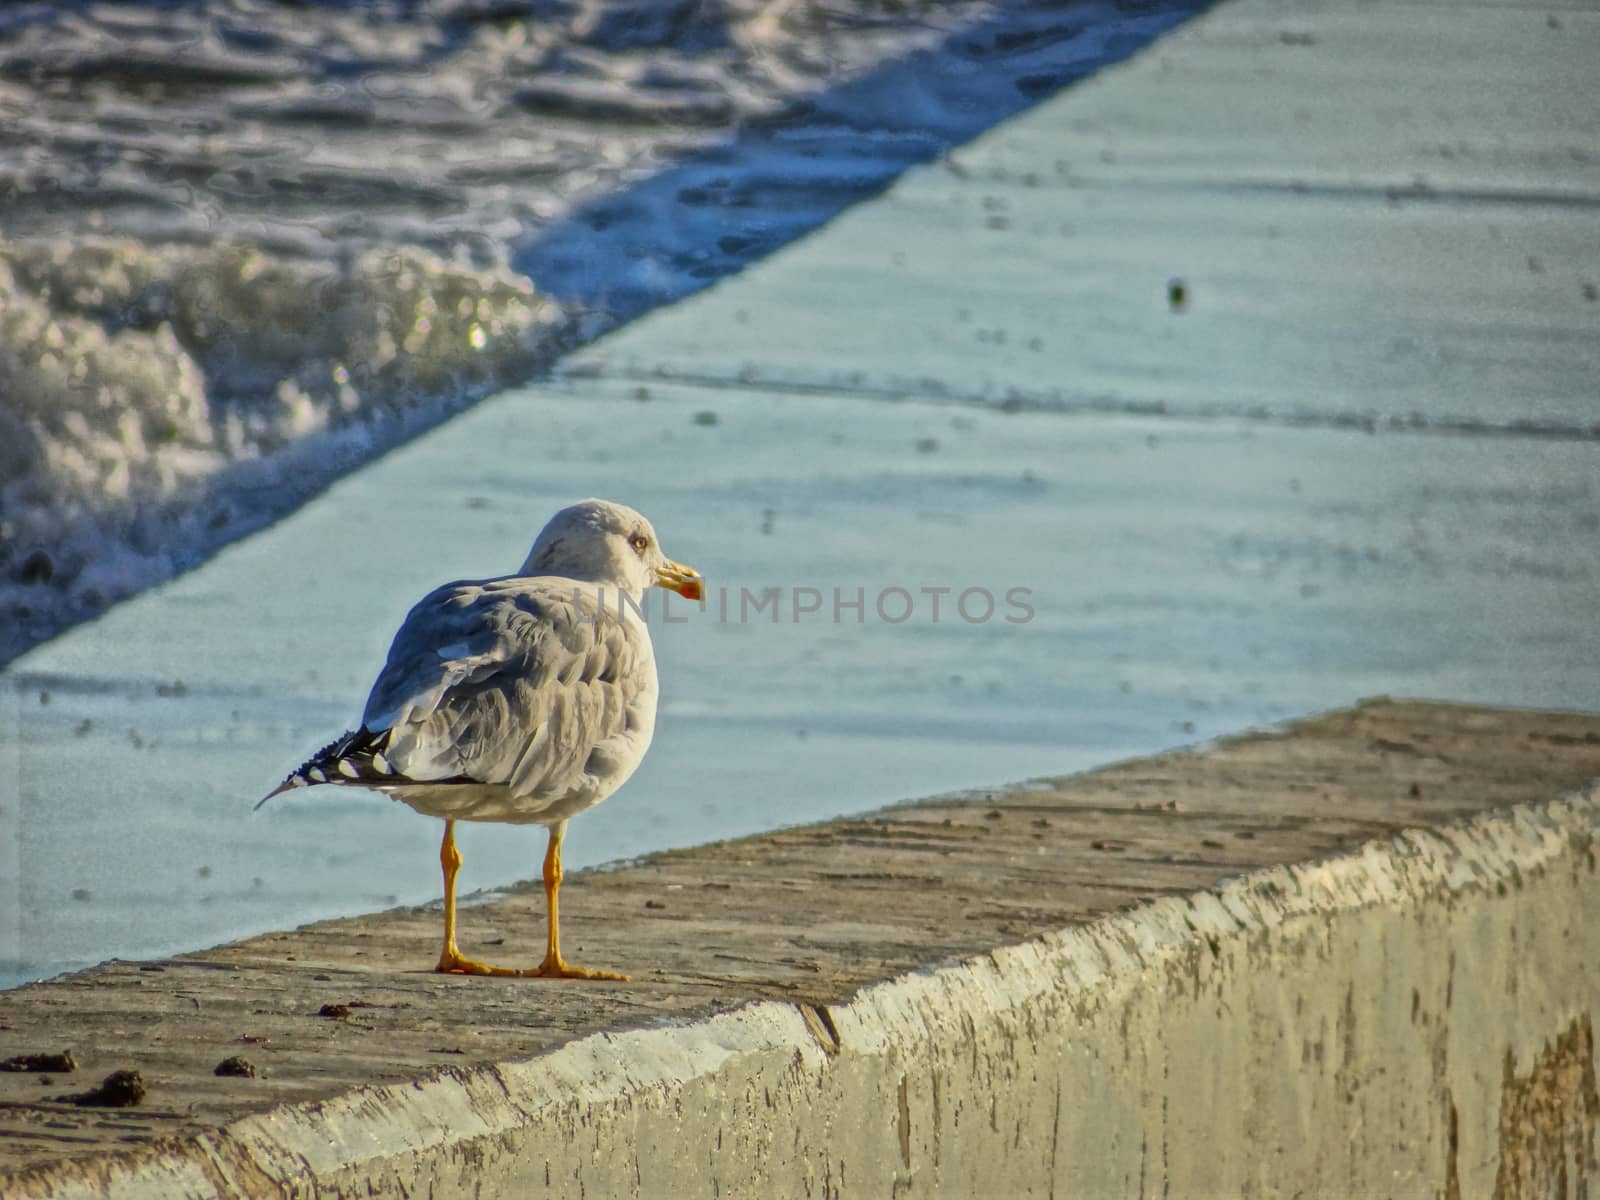 A seagull sunbathing in the summer days near the seacoast.